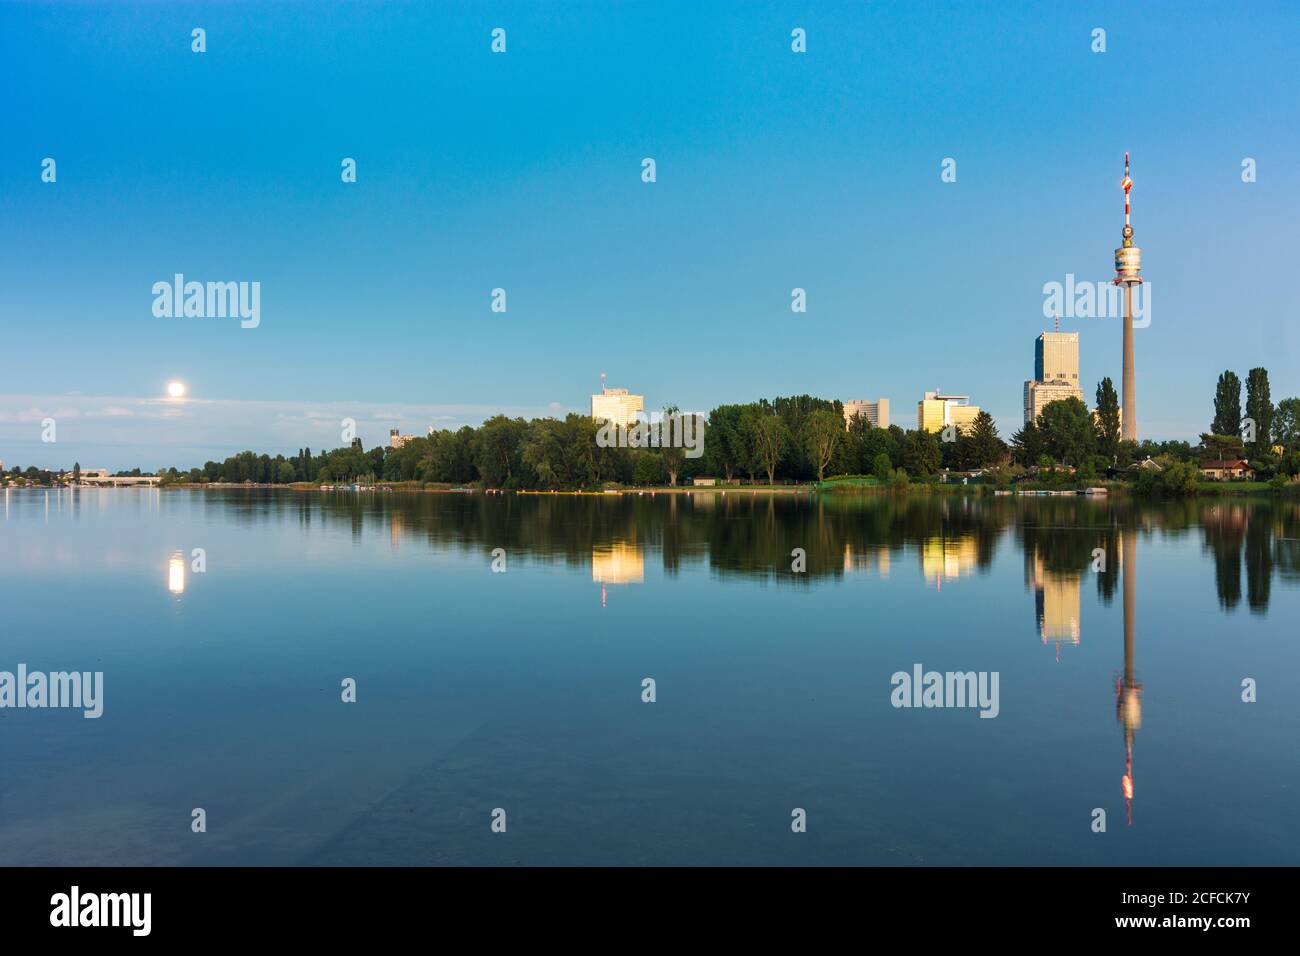 Wien / Vienna, oxbow lake Alte Donau (Old Danube),  tower Donauturm, DC Tower 1, full moon rising in 22. Donaustadt, Vienna, Austria Stock Photo